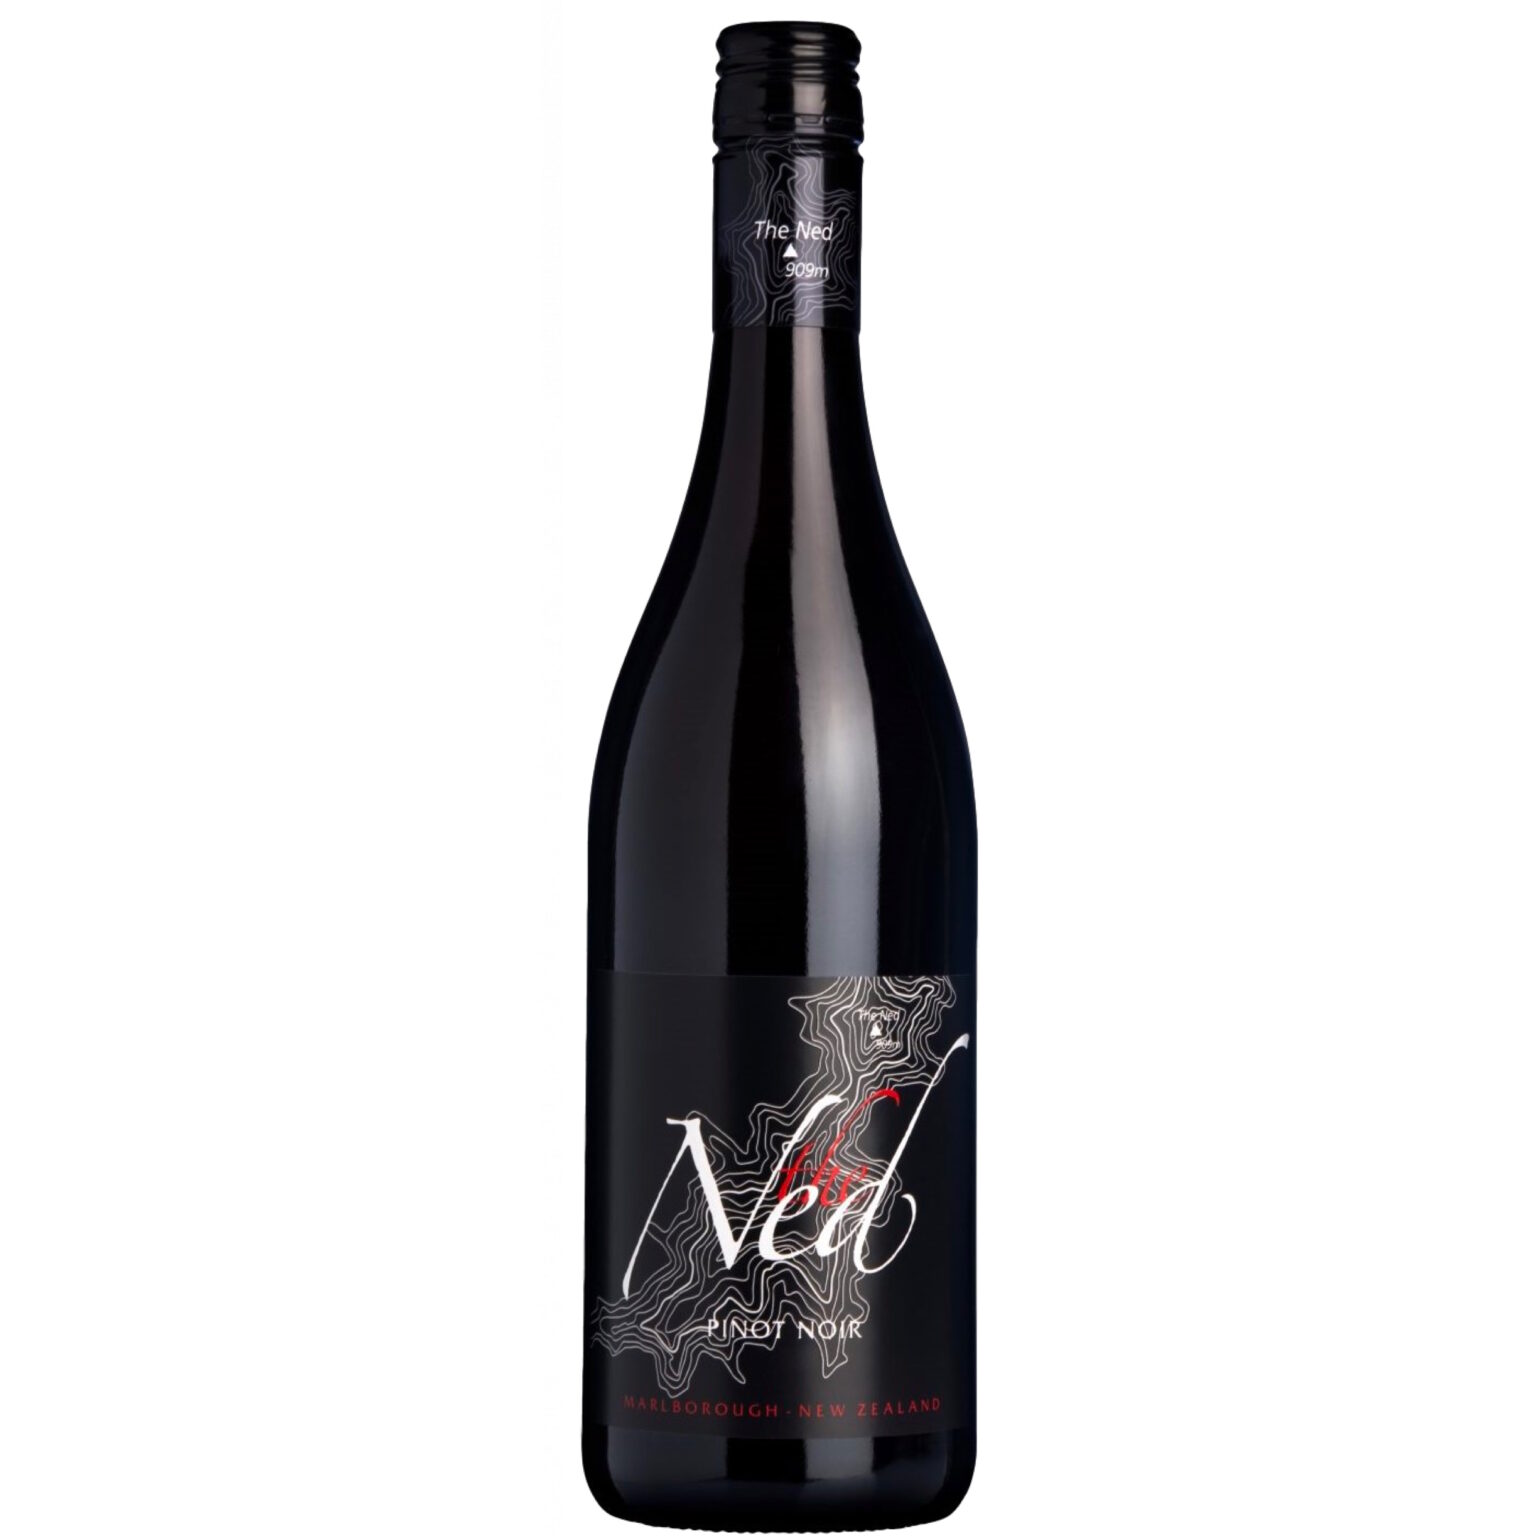 The Ned Pinot Noir The Spirit of Wine